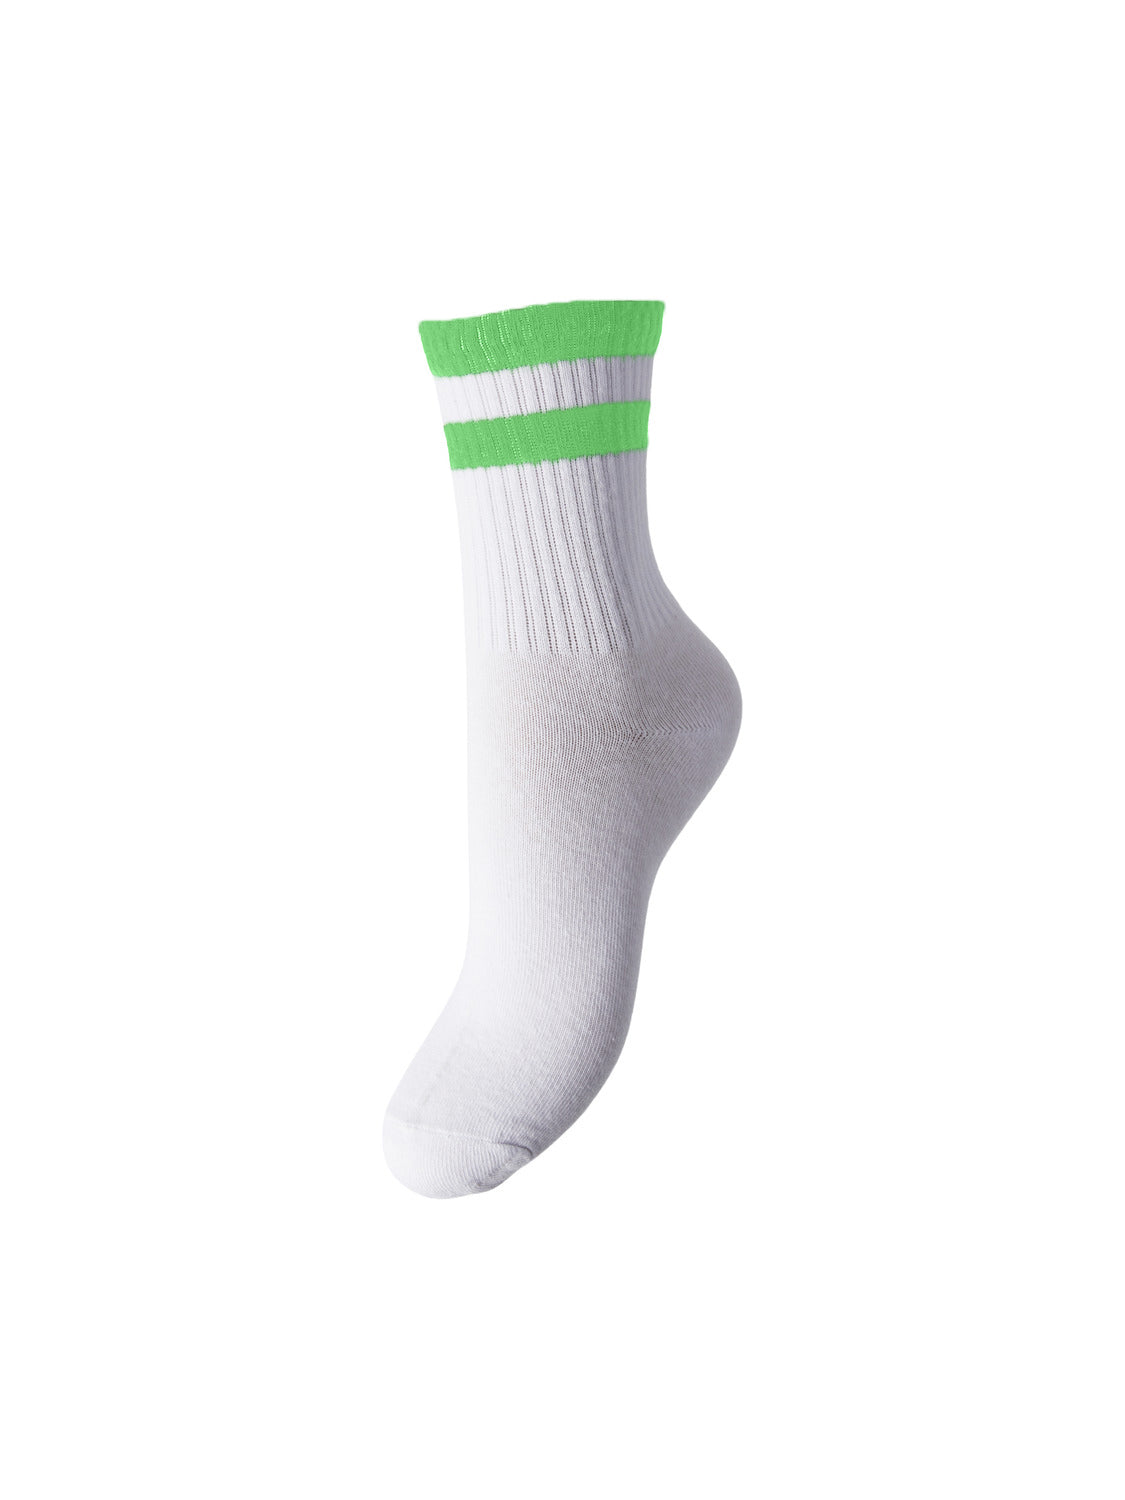 PCSANNE Socks - Bright White